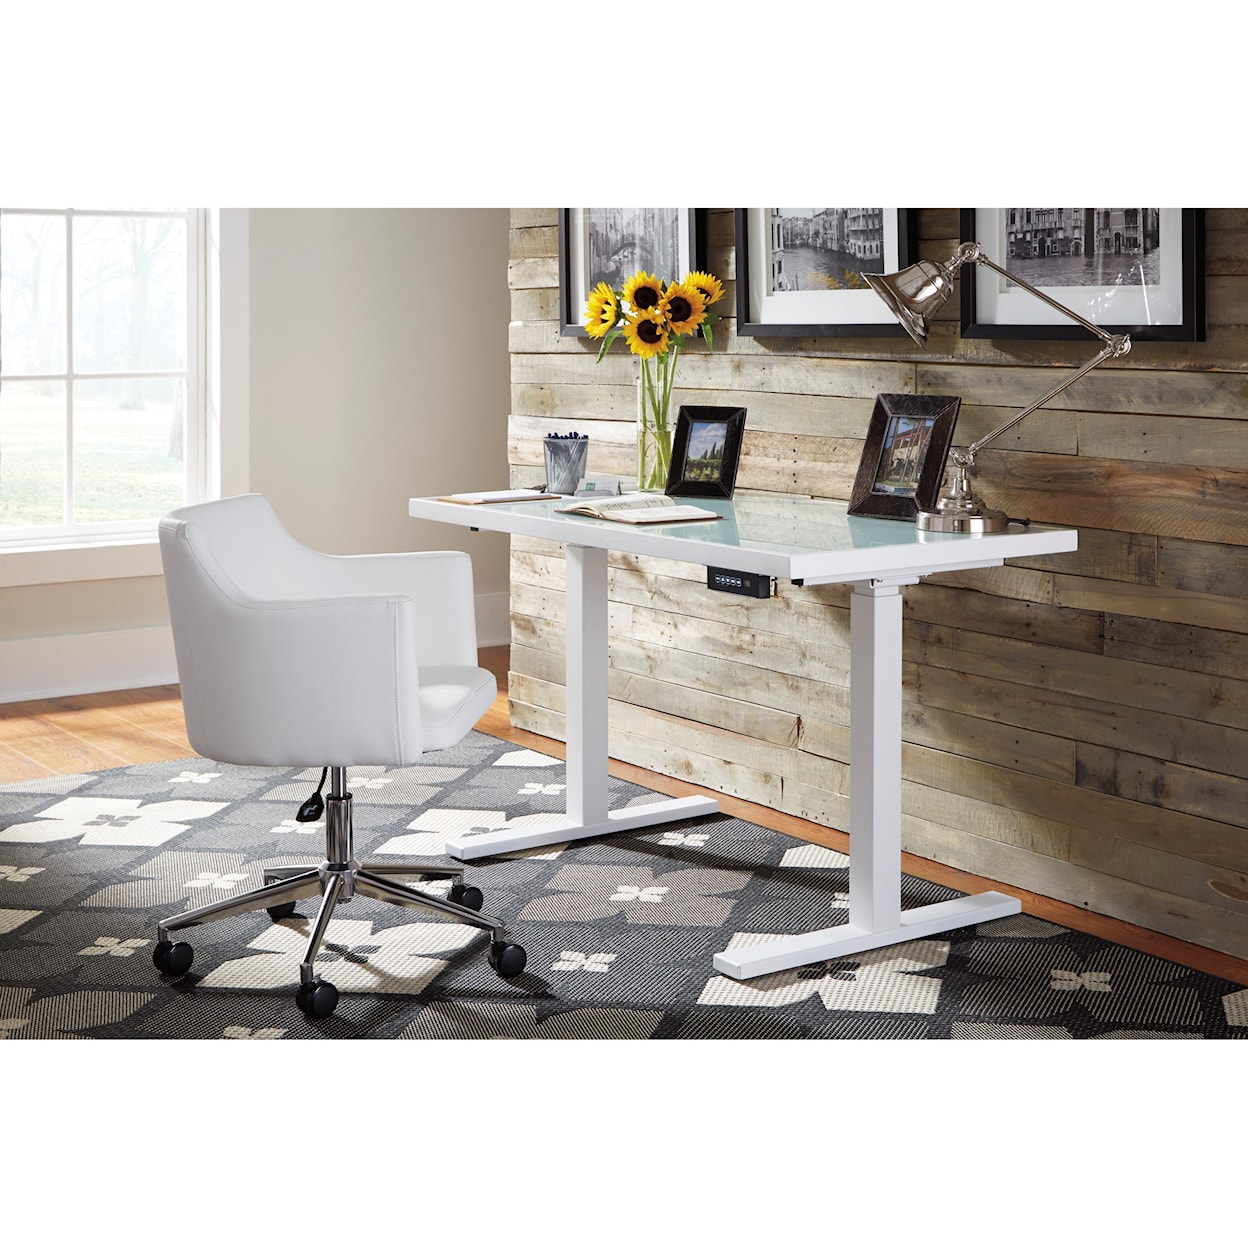 Benchcraft Baraga Home Office Swivel Desk Chair